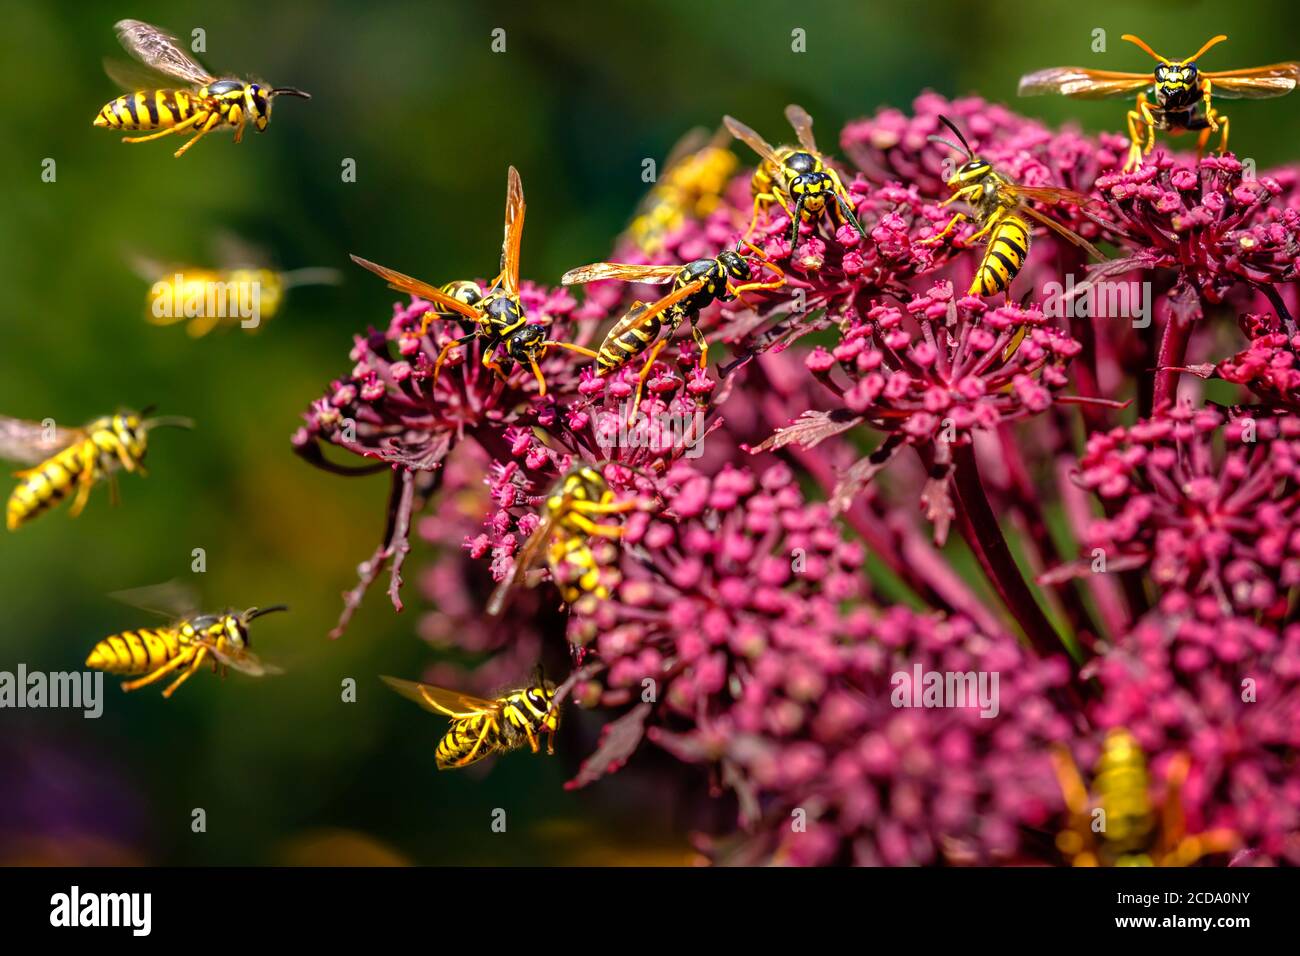 Wasps (Deutsche Wespe / vespula germanica) pollinating and fighting around Giant Angelica (Roter Engelwurz / angelica gigas). Stock Photo